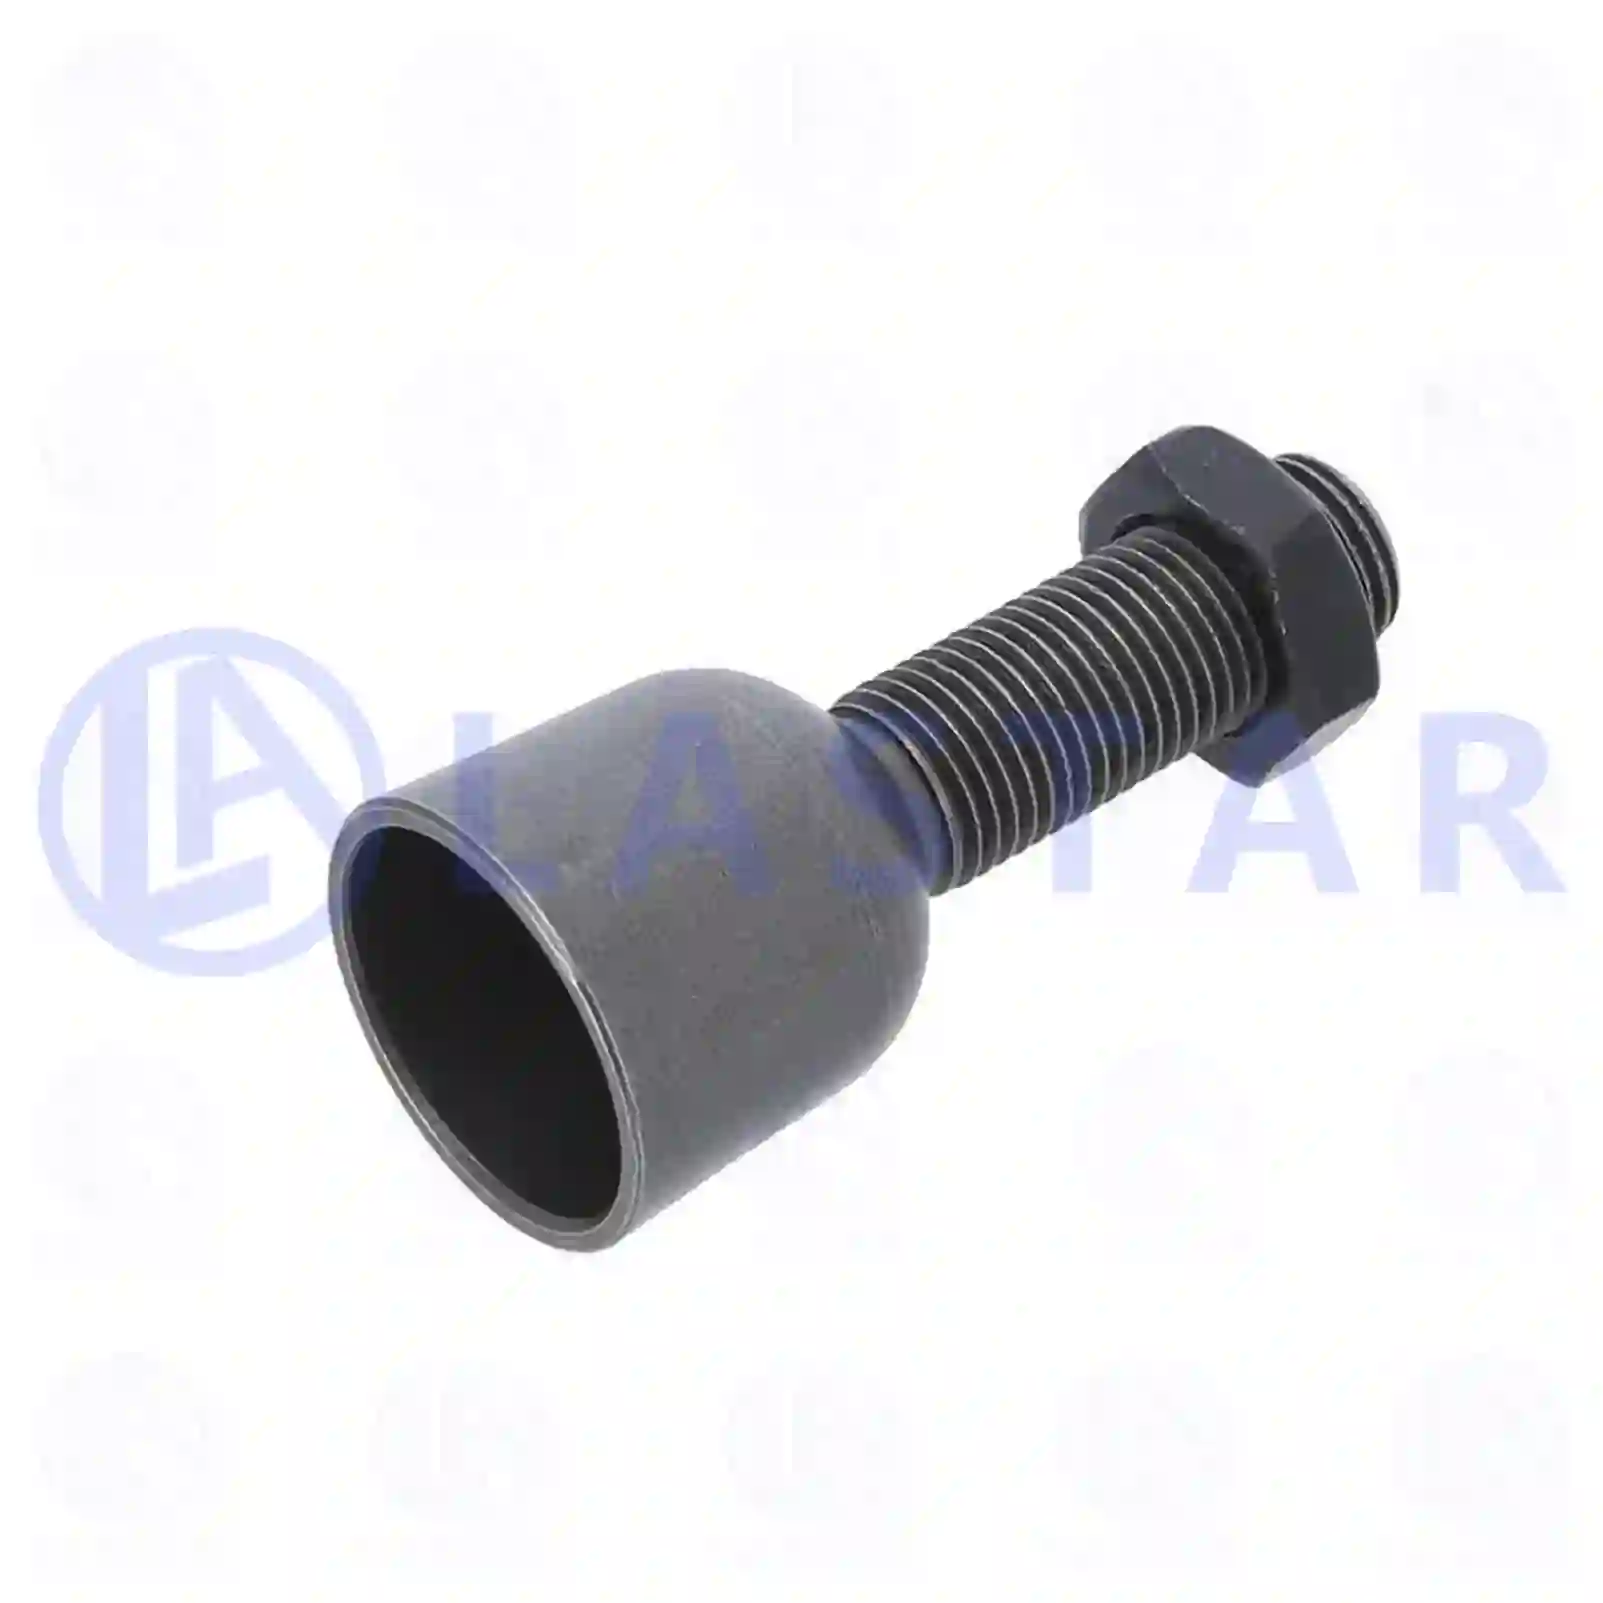  Cylinder Head Adjusting screw, la no: 77702818 ,  oem no:1421095, 1534642, 1863494, 534642 Lastar Spare Part | Truck Spare Parts, Auotomotive Spare Parts